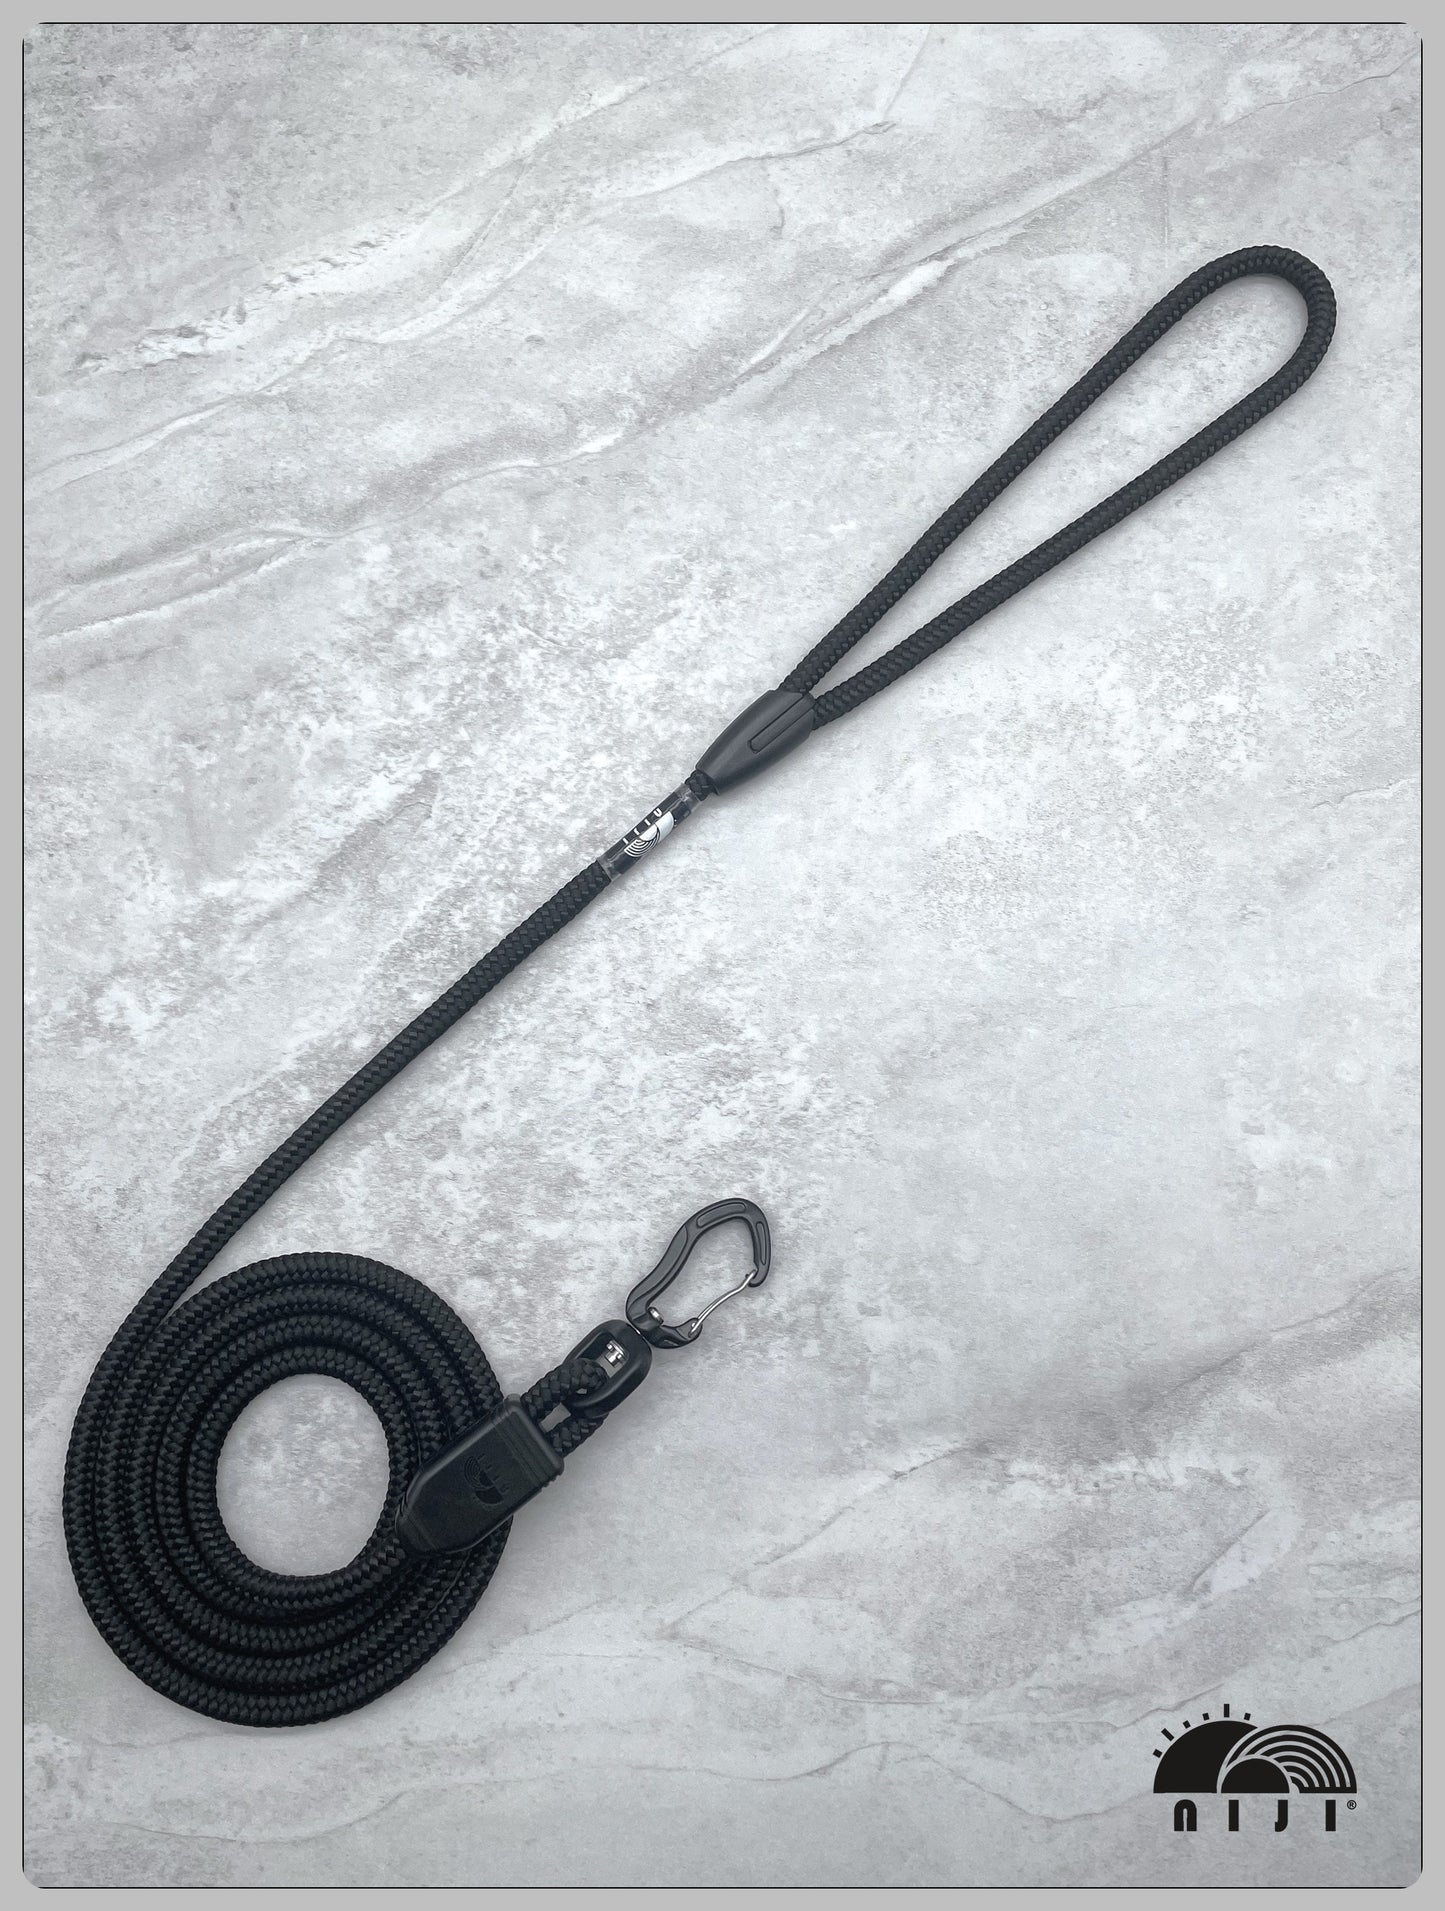 niji loop handle dog leash 8mm black color